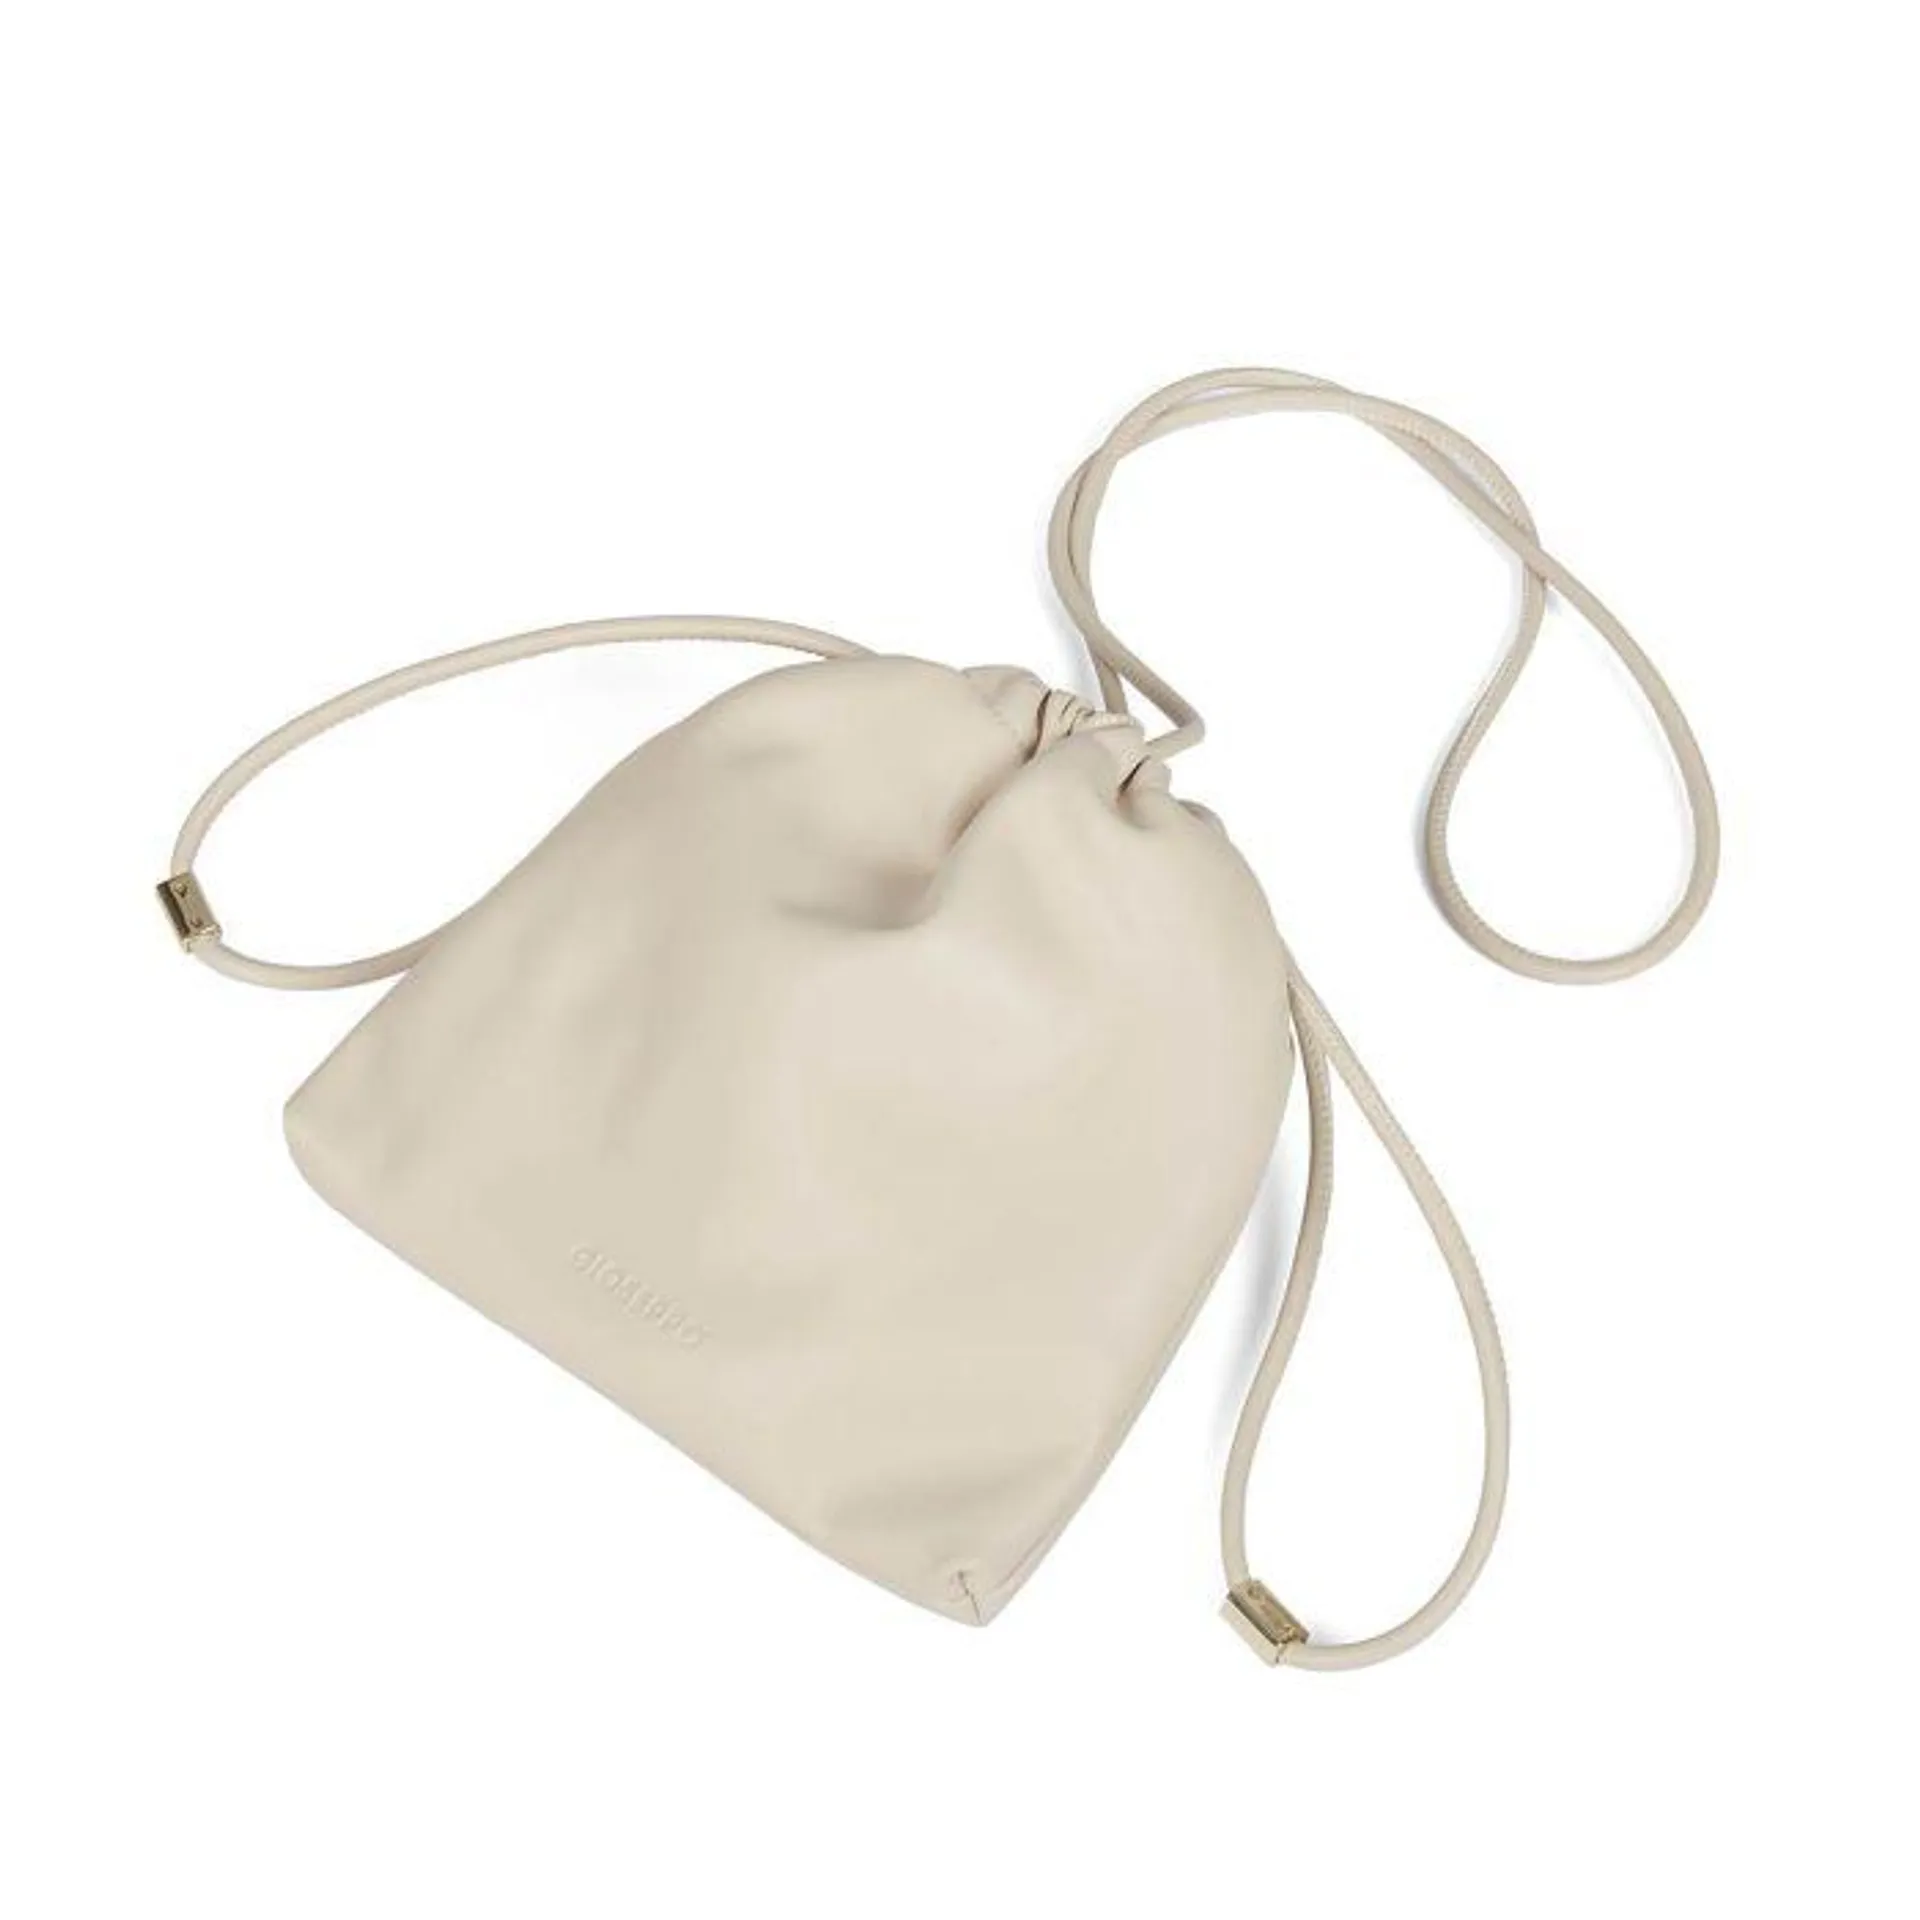 Leyrat women's mini off-white crossbody bag